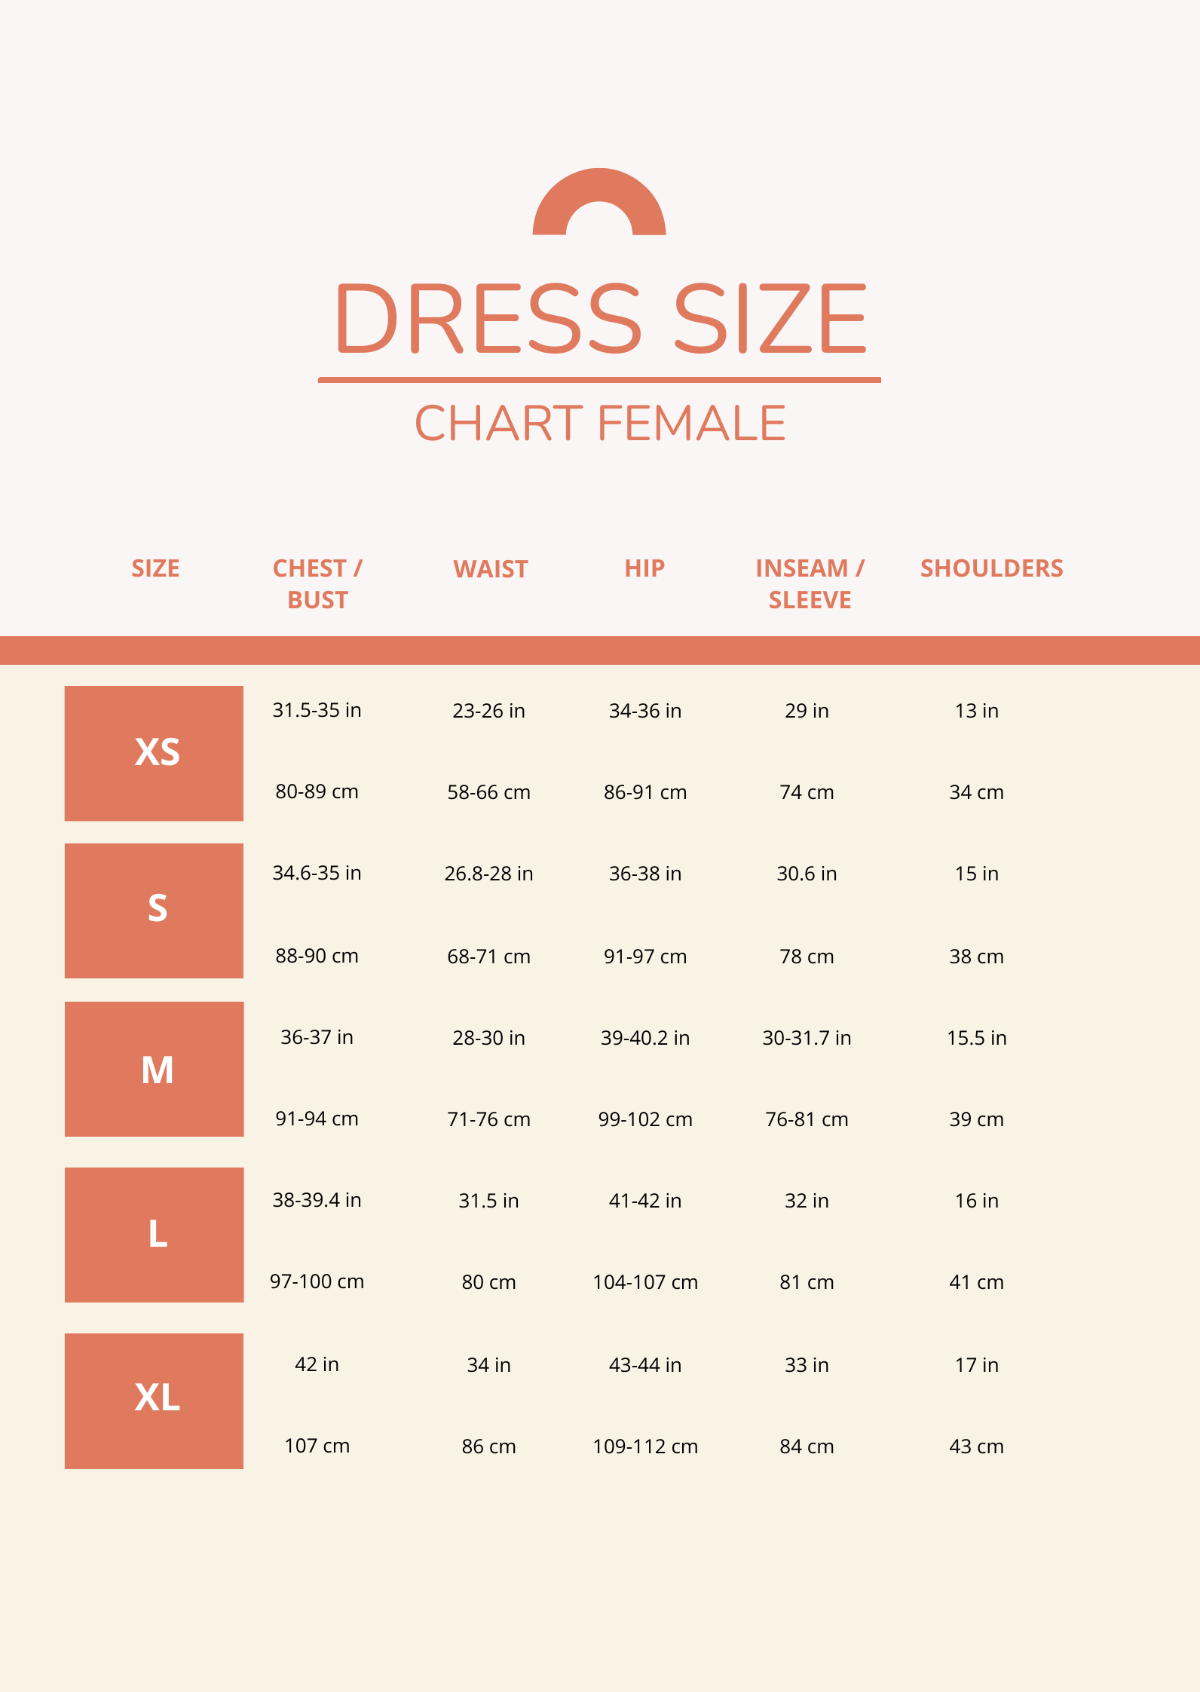 Dress Size Chart Female Template